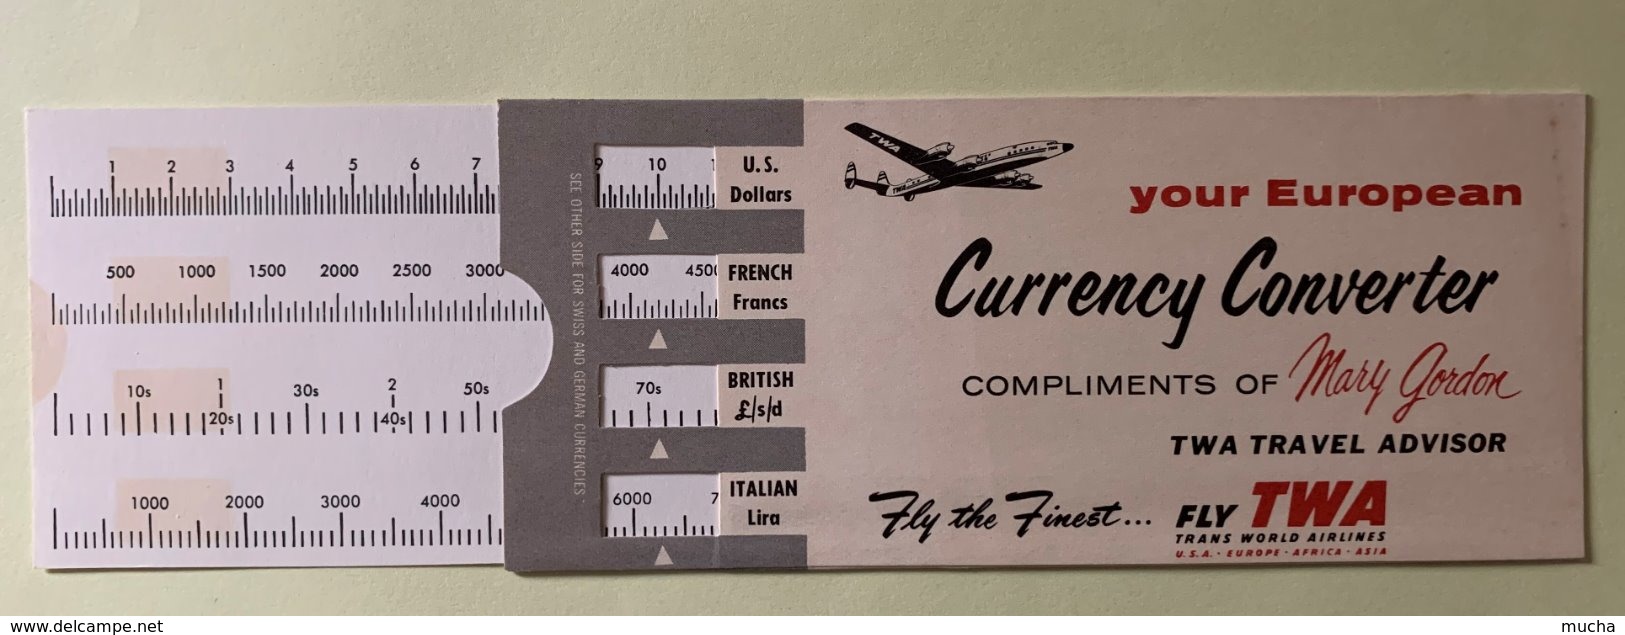 9245  -  Your European Currency Converter Fly TWA  1958 - Publicités